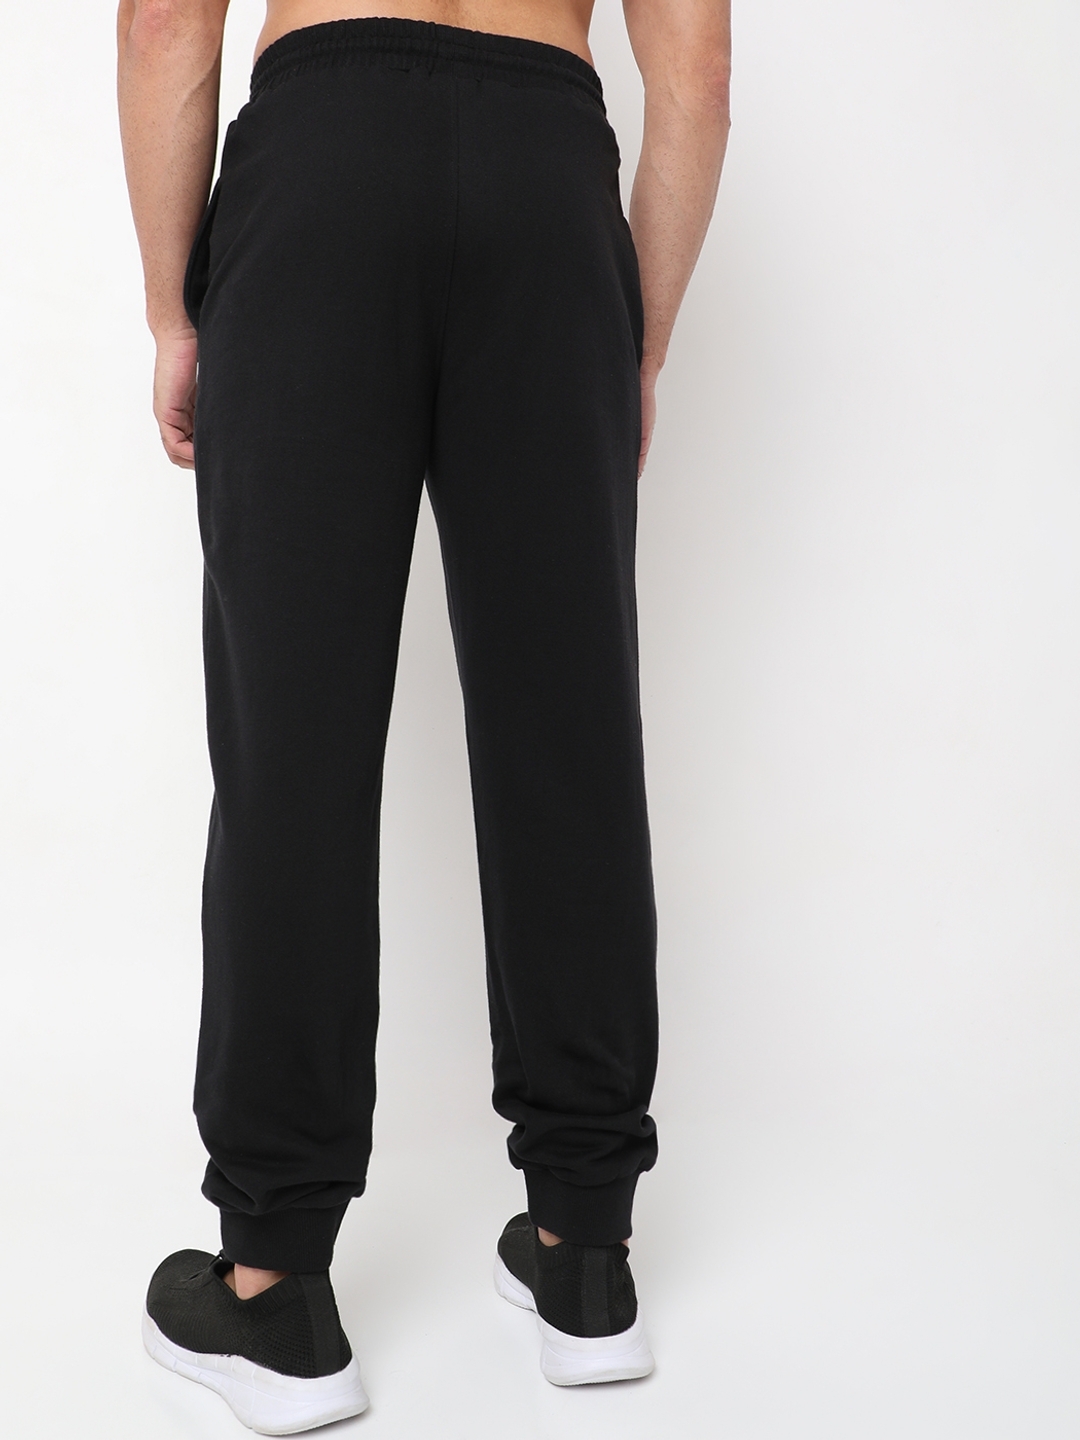 Buy Zipper Track Pant For Men Online  Lavos Performance